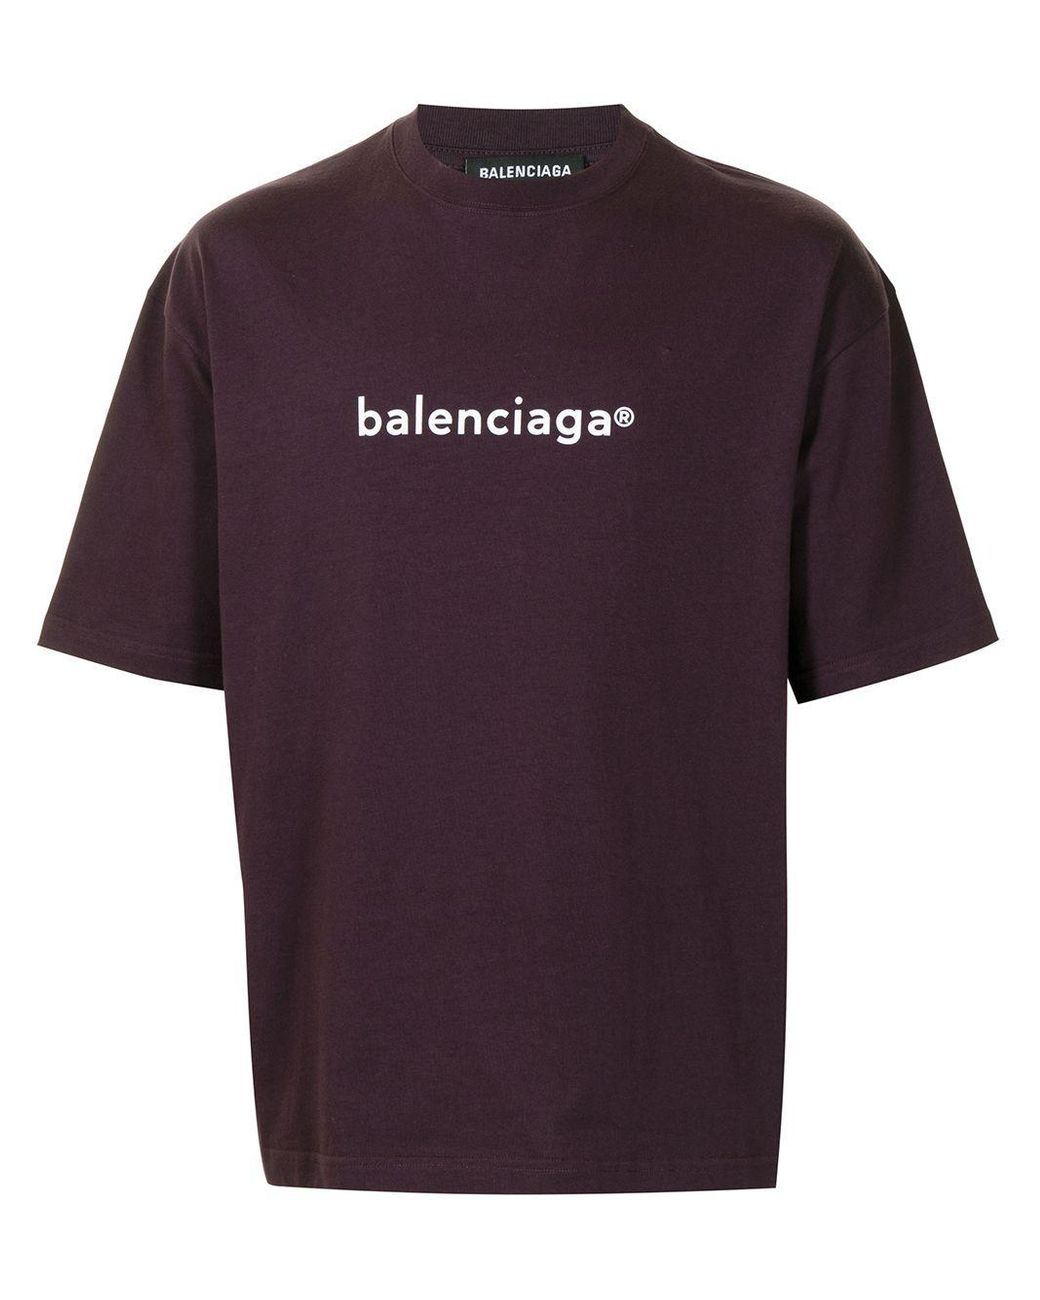 Balenciaga Cotton Logo-print Oversized T-shirt in Purple for Men - Lyst